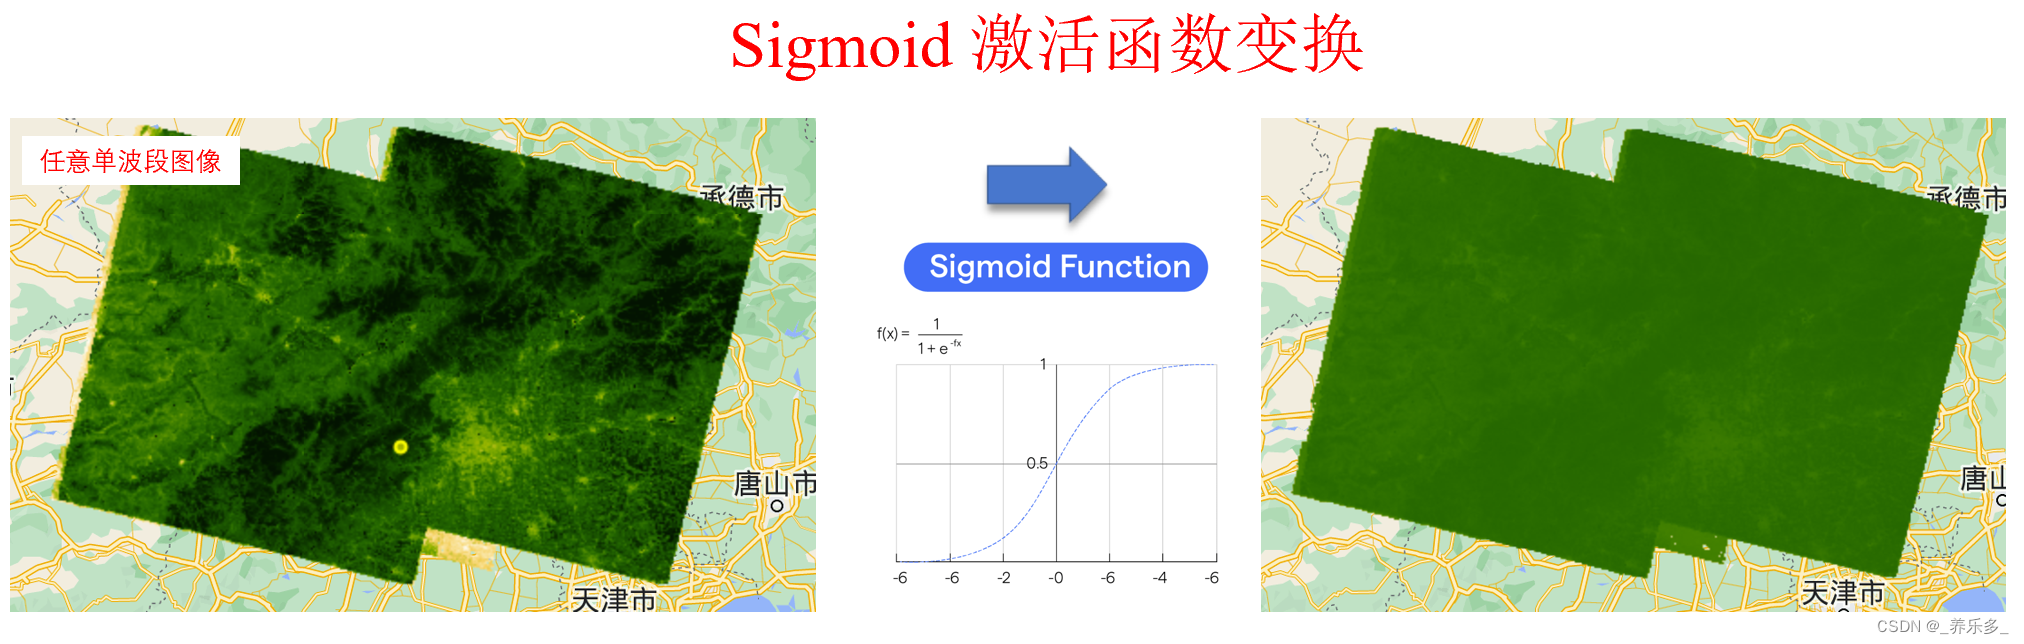 GEE：使用Sigmoid激活函数对单波段图像进行变换（以NDVI为例）